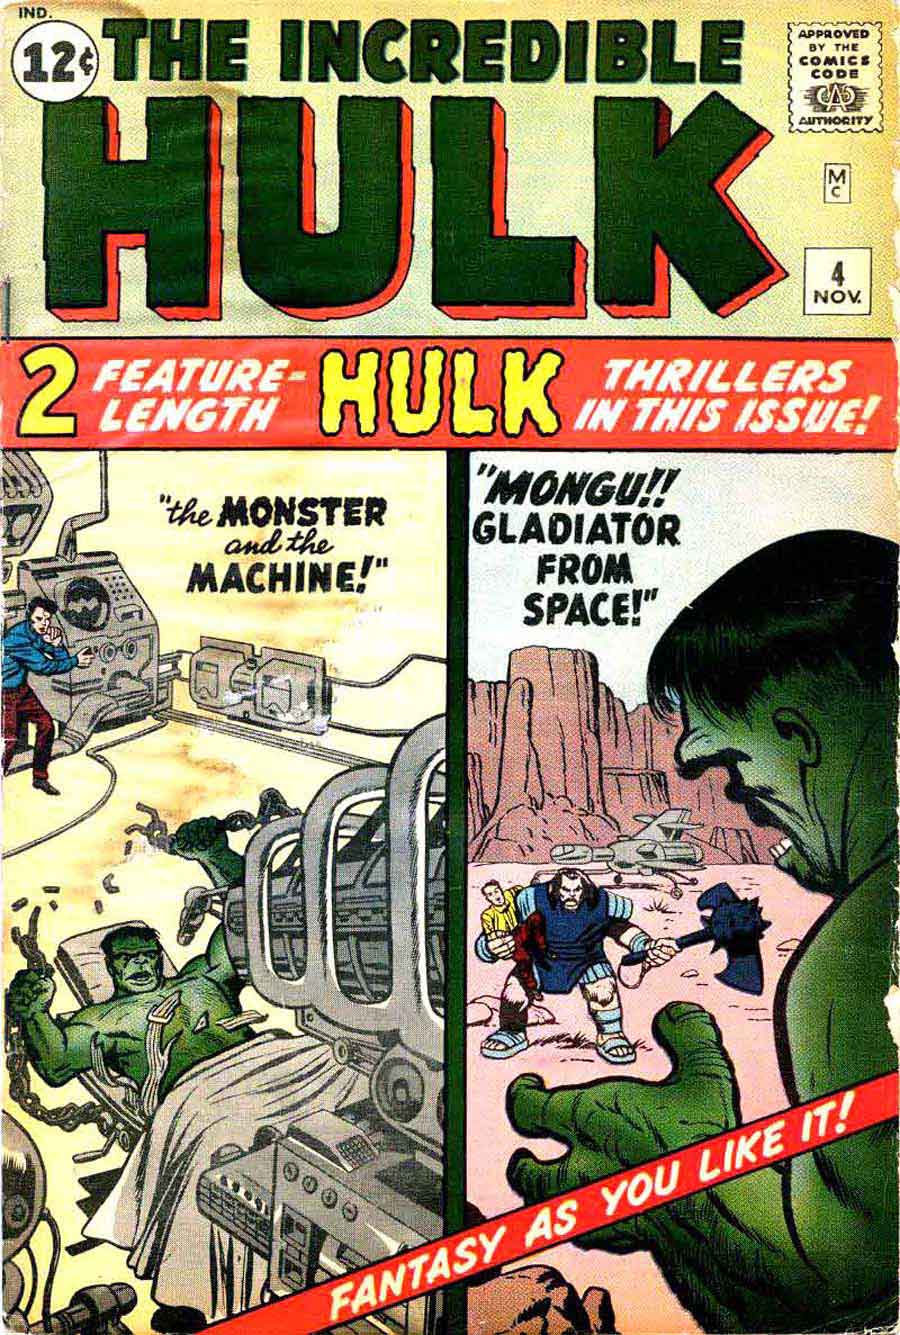 Incredible Hulk v1 #4 marvel comic book cover art by Jack Kirby